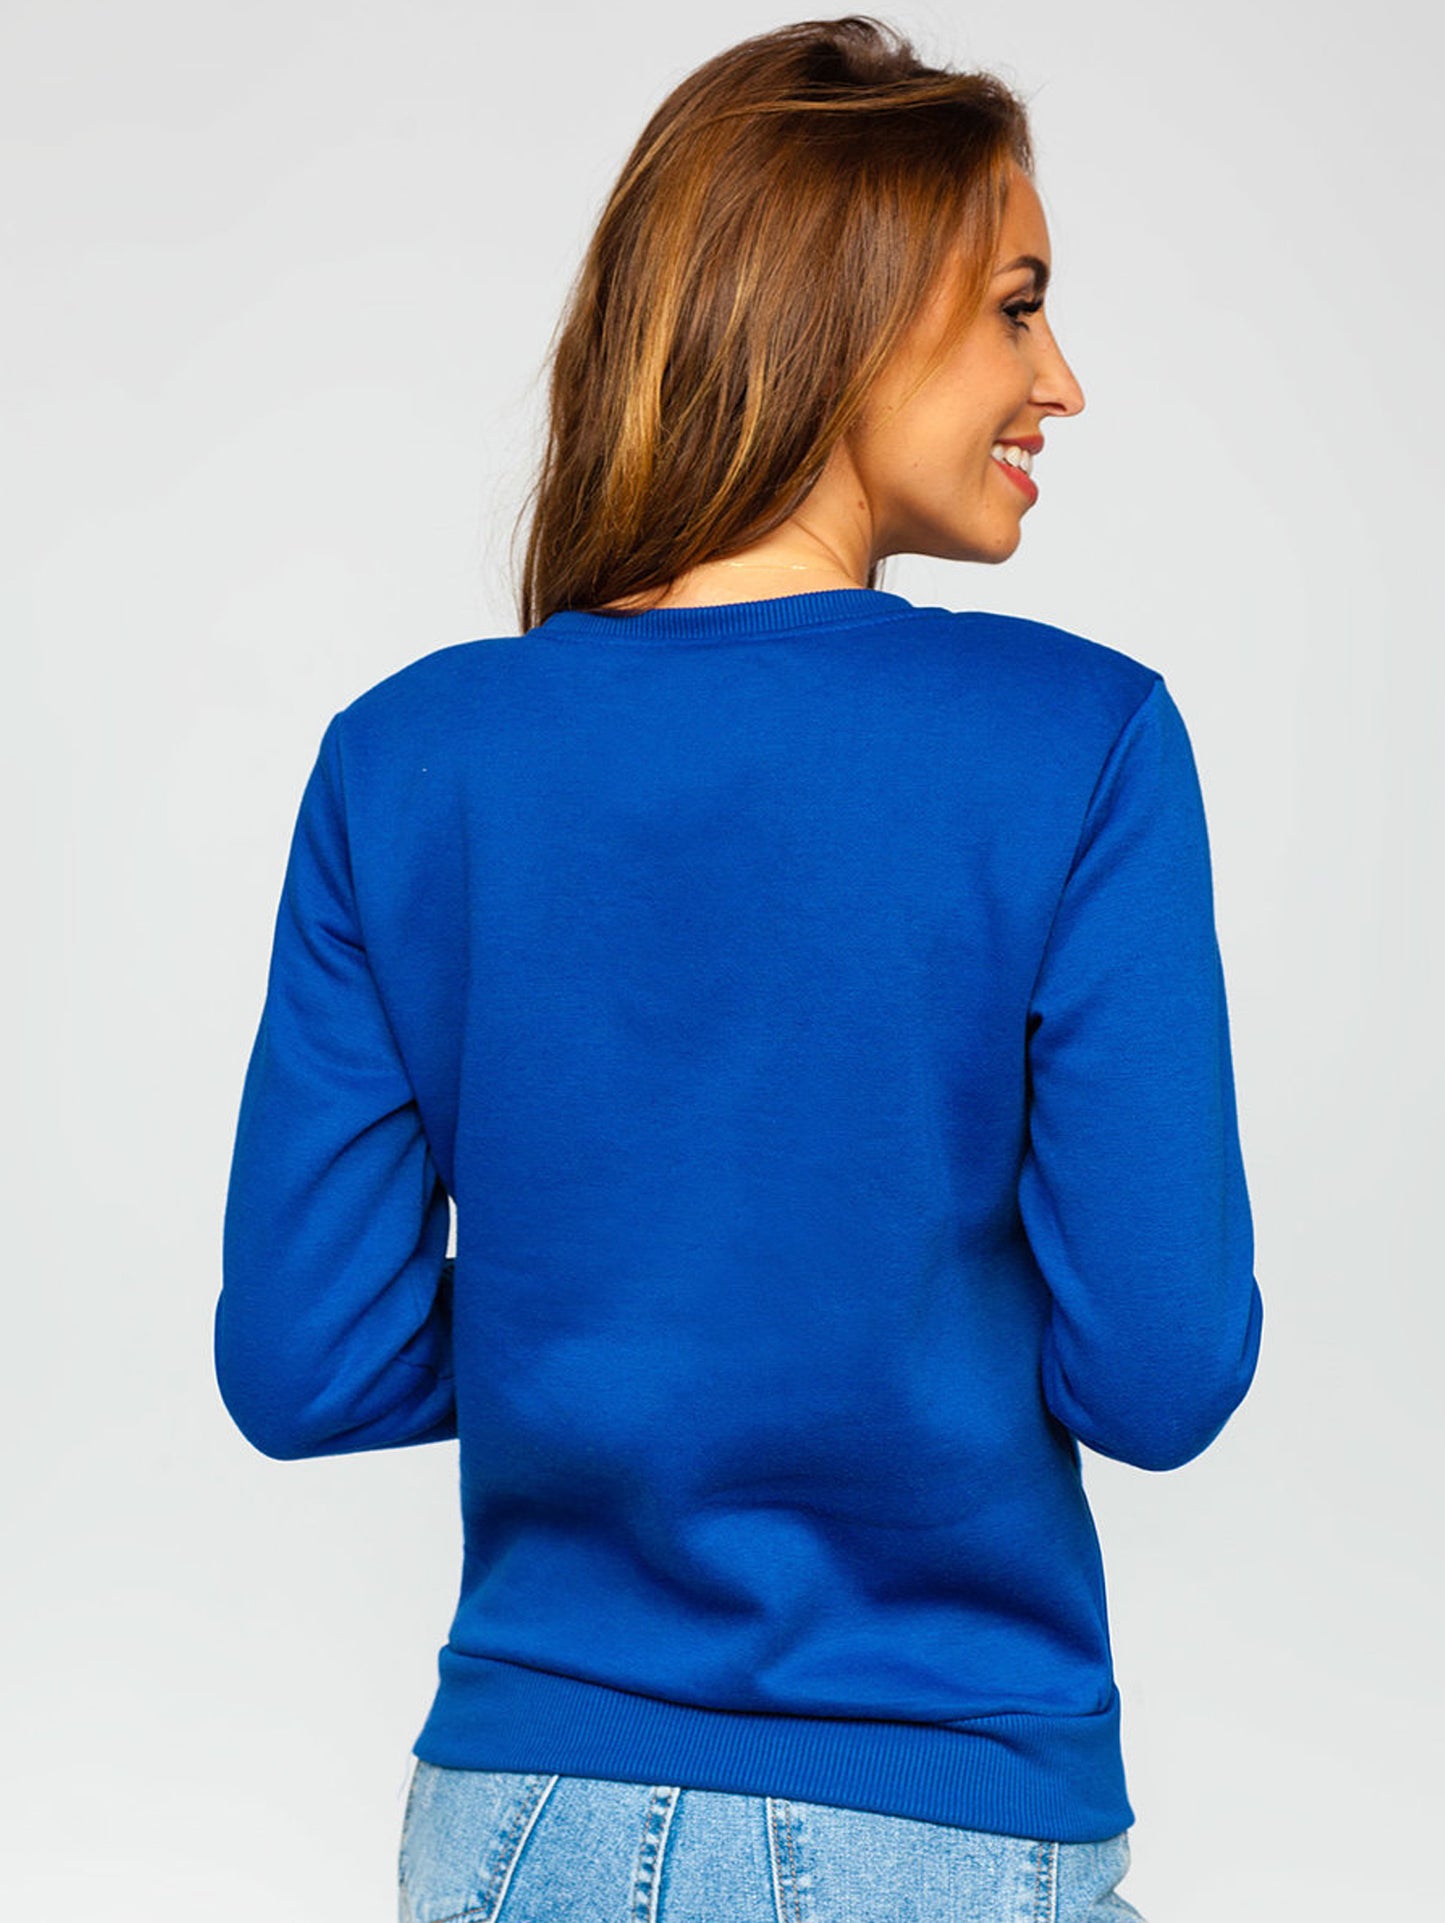 Women's Basic Royal Blue Sweatshirt